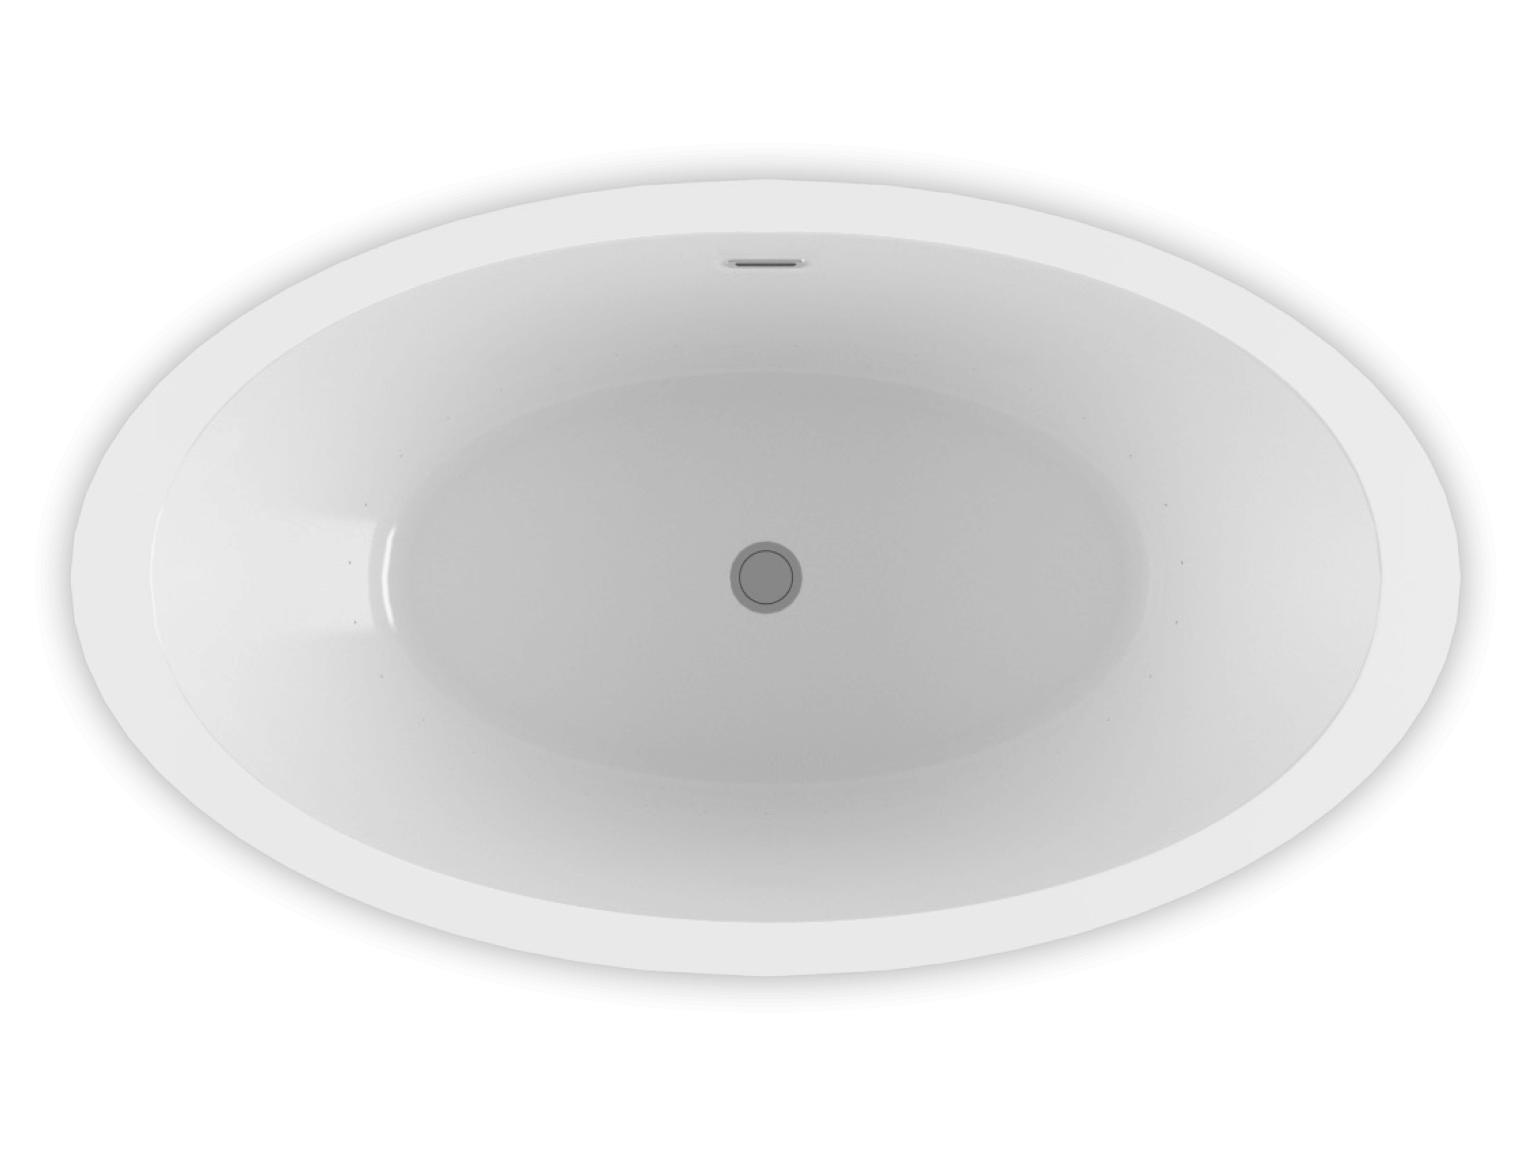 OPALIA 6839 Centered Ellipse air jet bathtub for your modern bathroom